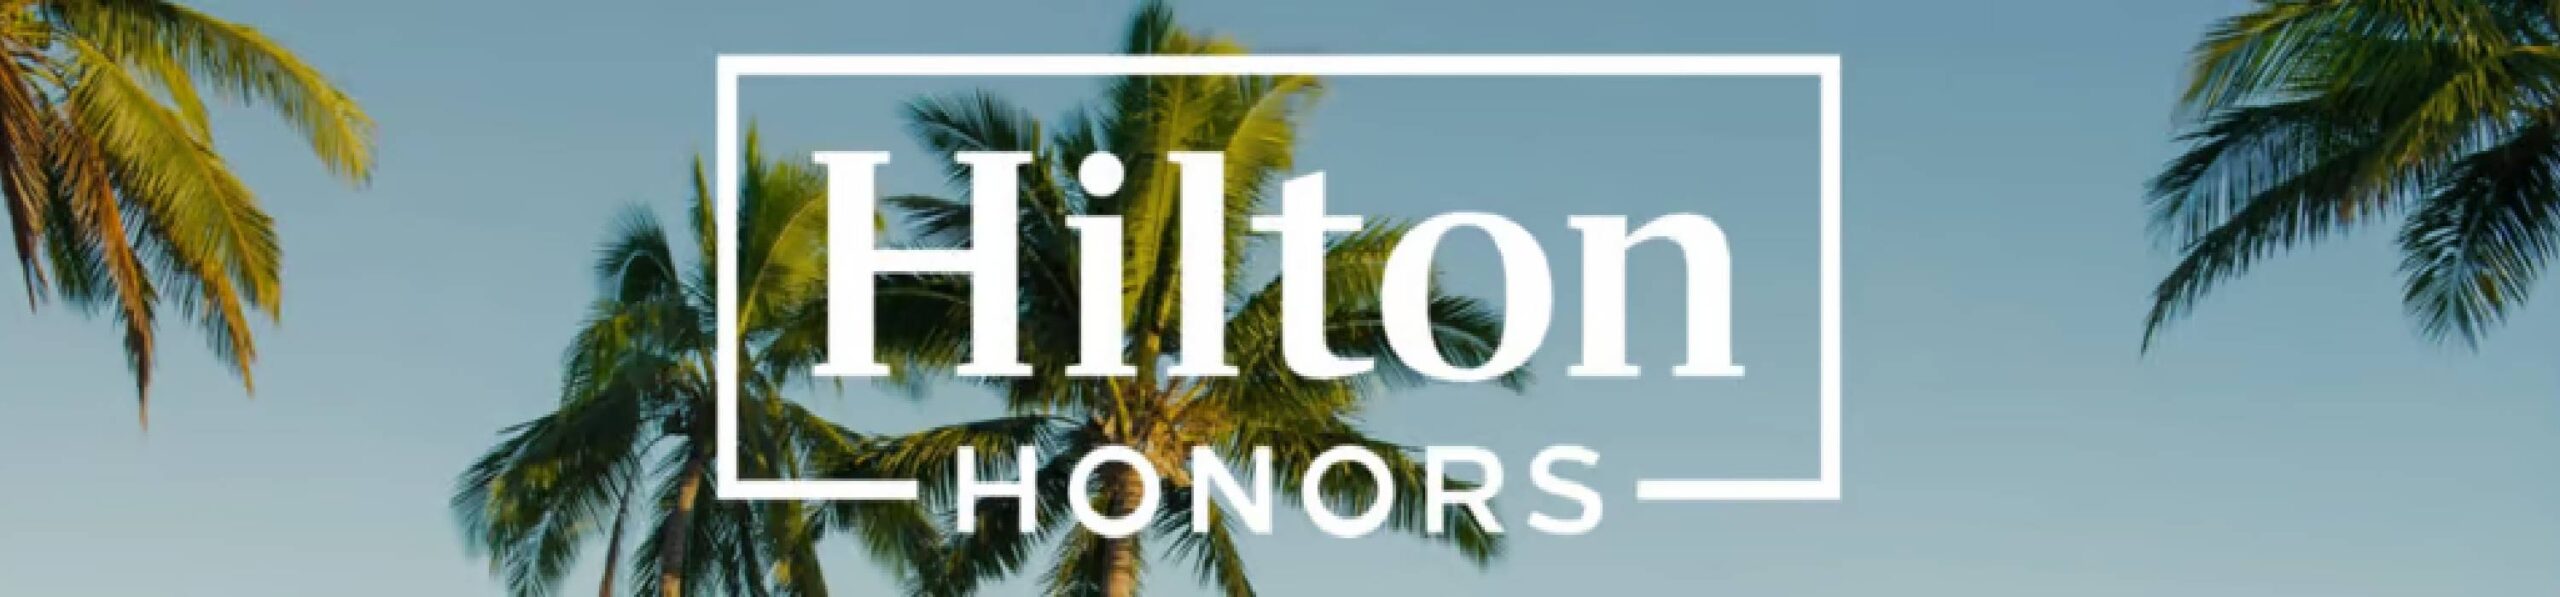 Hilton Banner